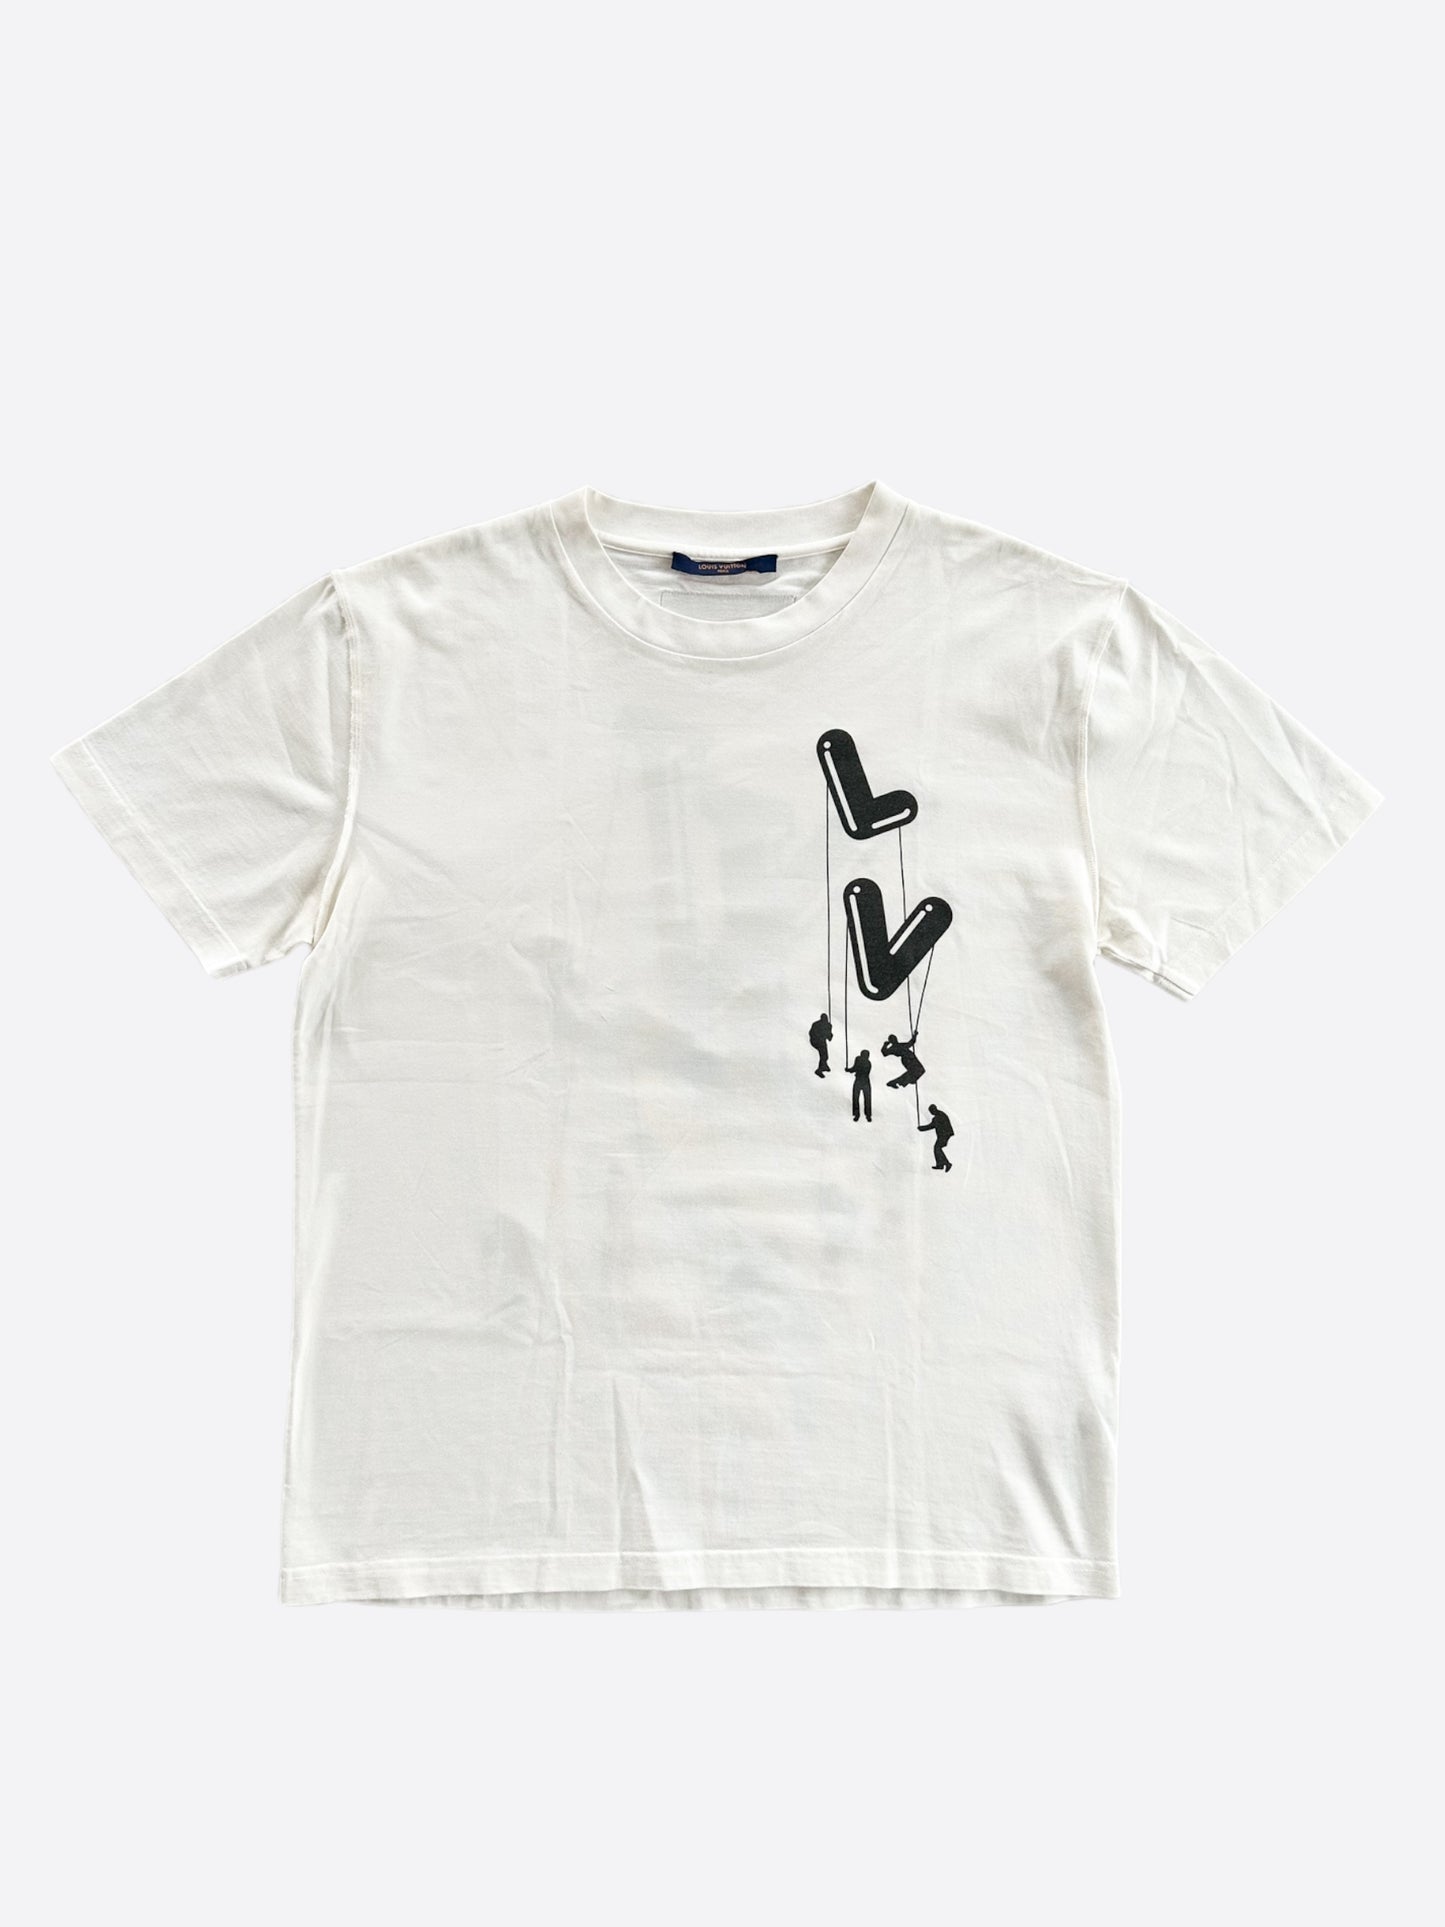 Louis Vuitton Men's T-Shirt